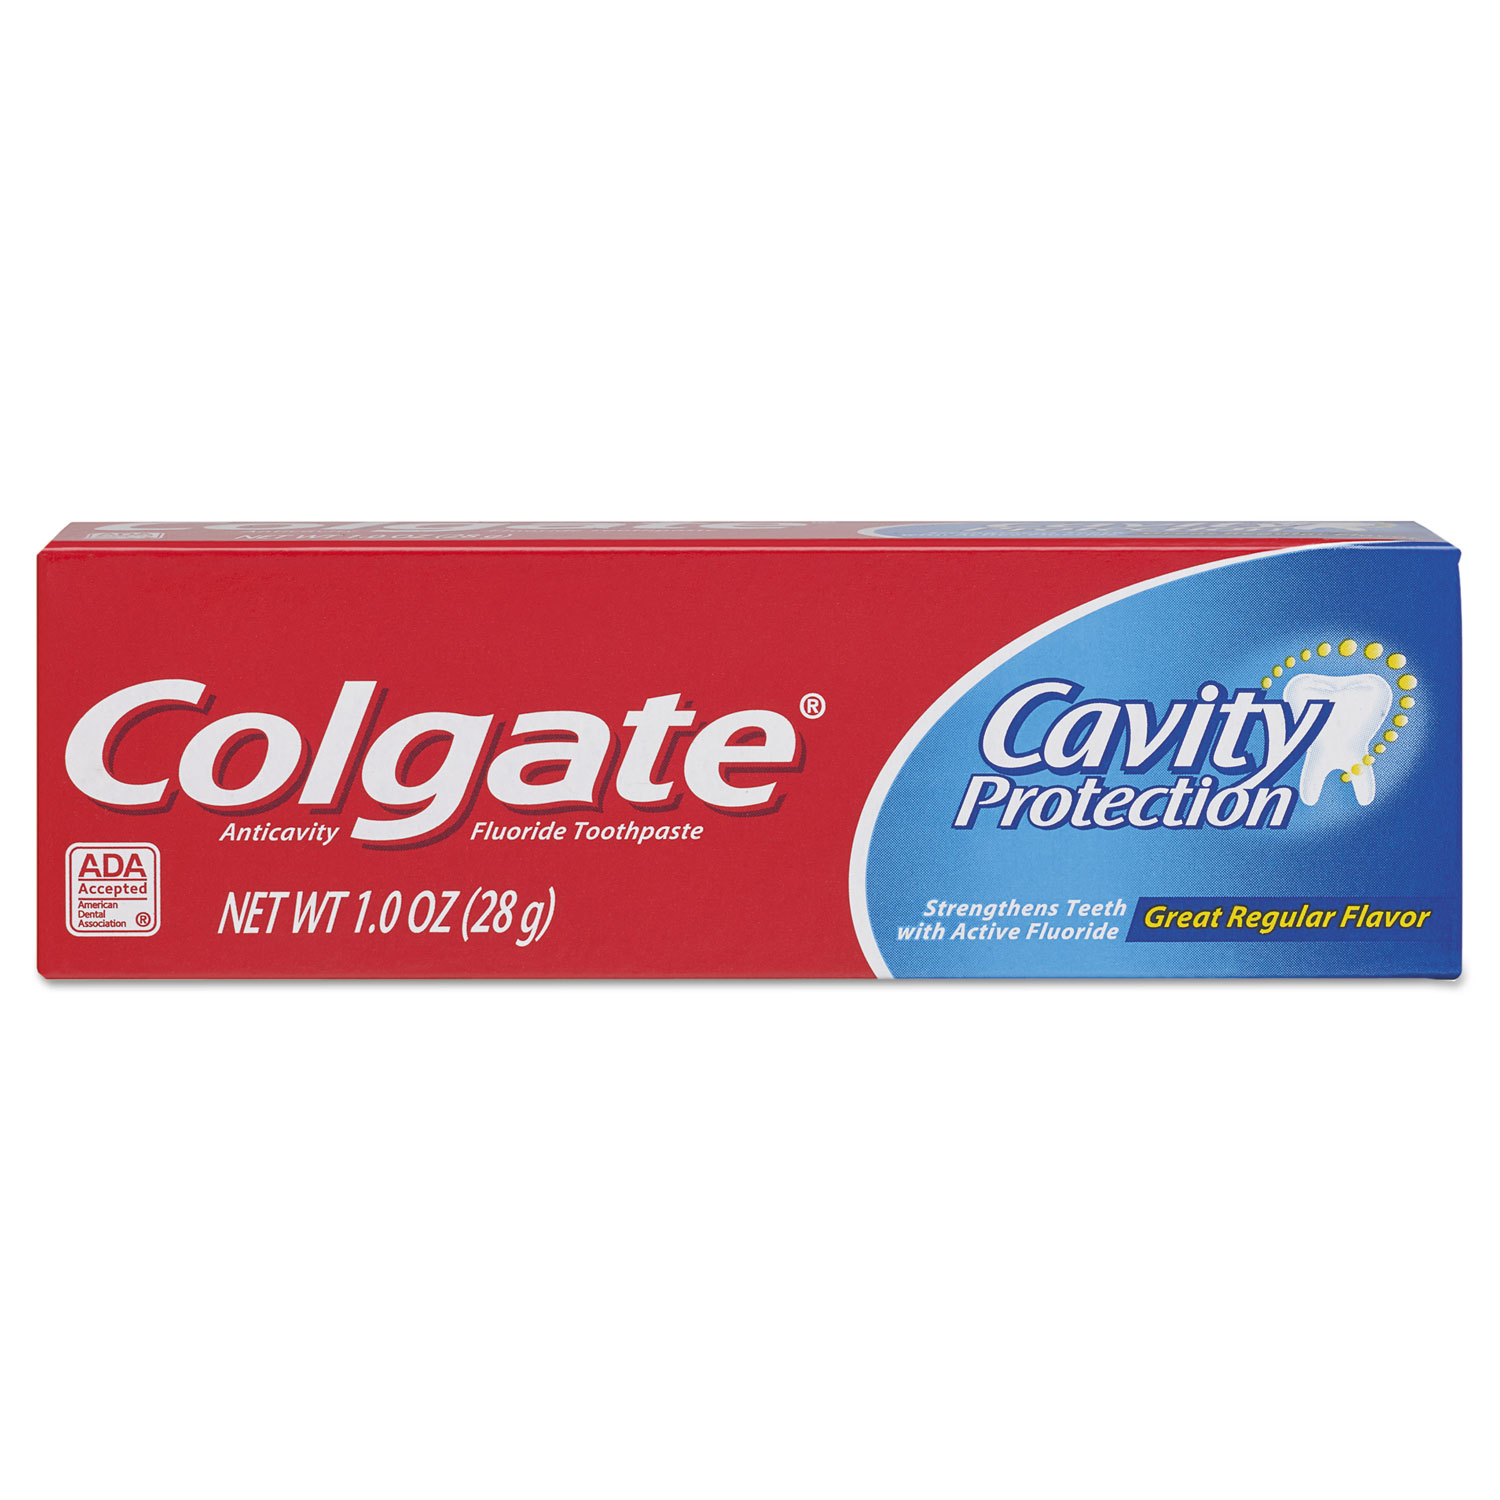 Cavity Protection Toothpaste, Regular Flavor, 1 oz Tube, 24/Carton